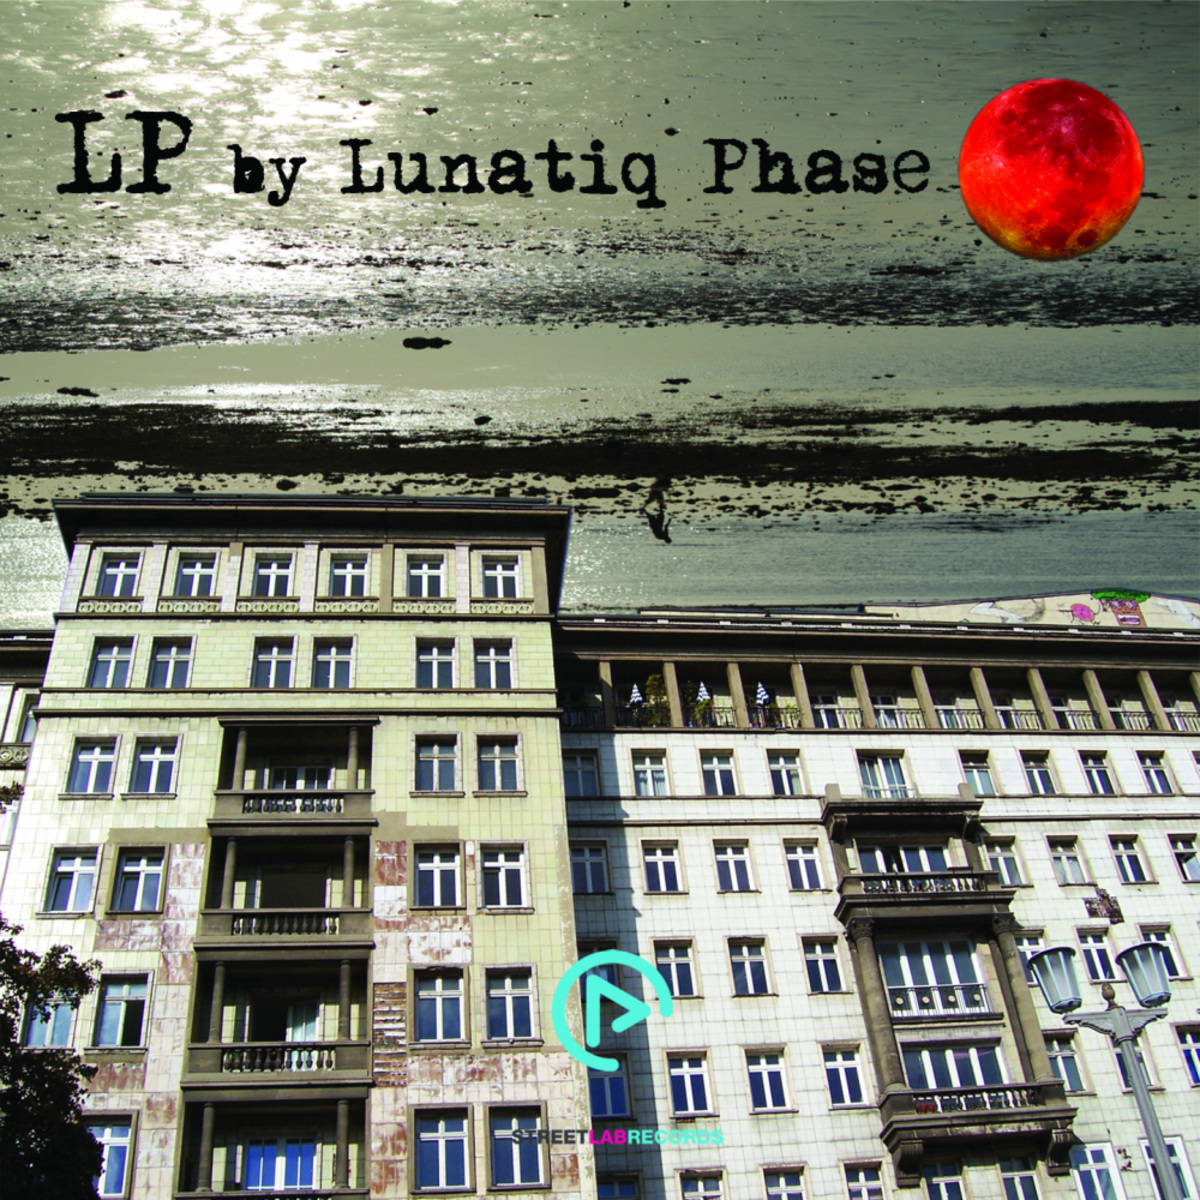 Lunatiq Phase - Lp / Streetlab Records